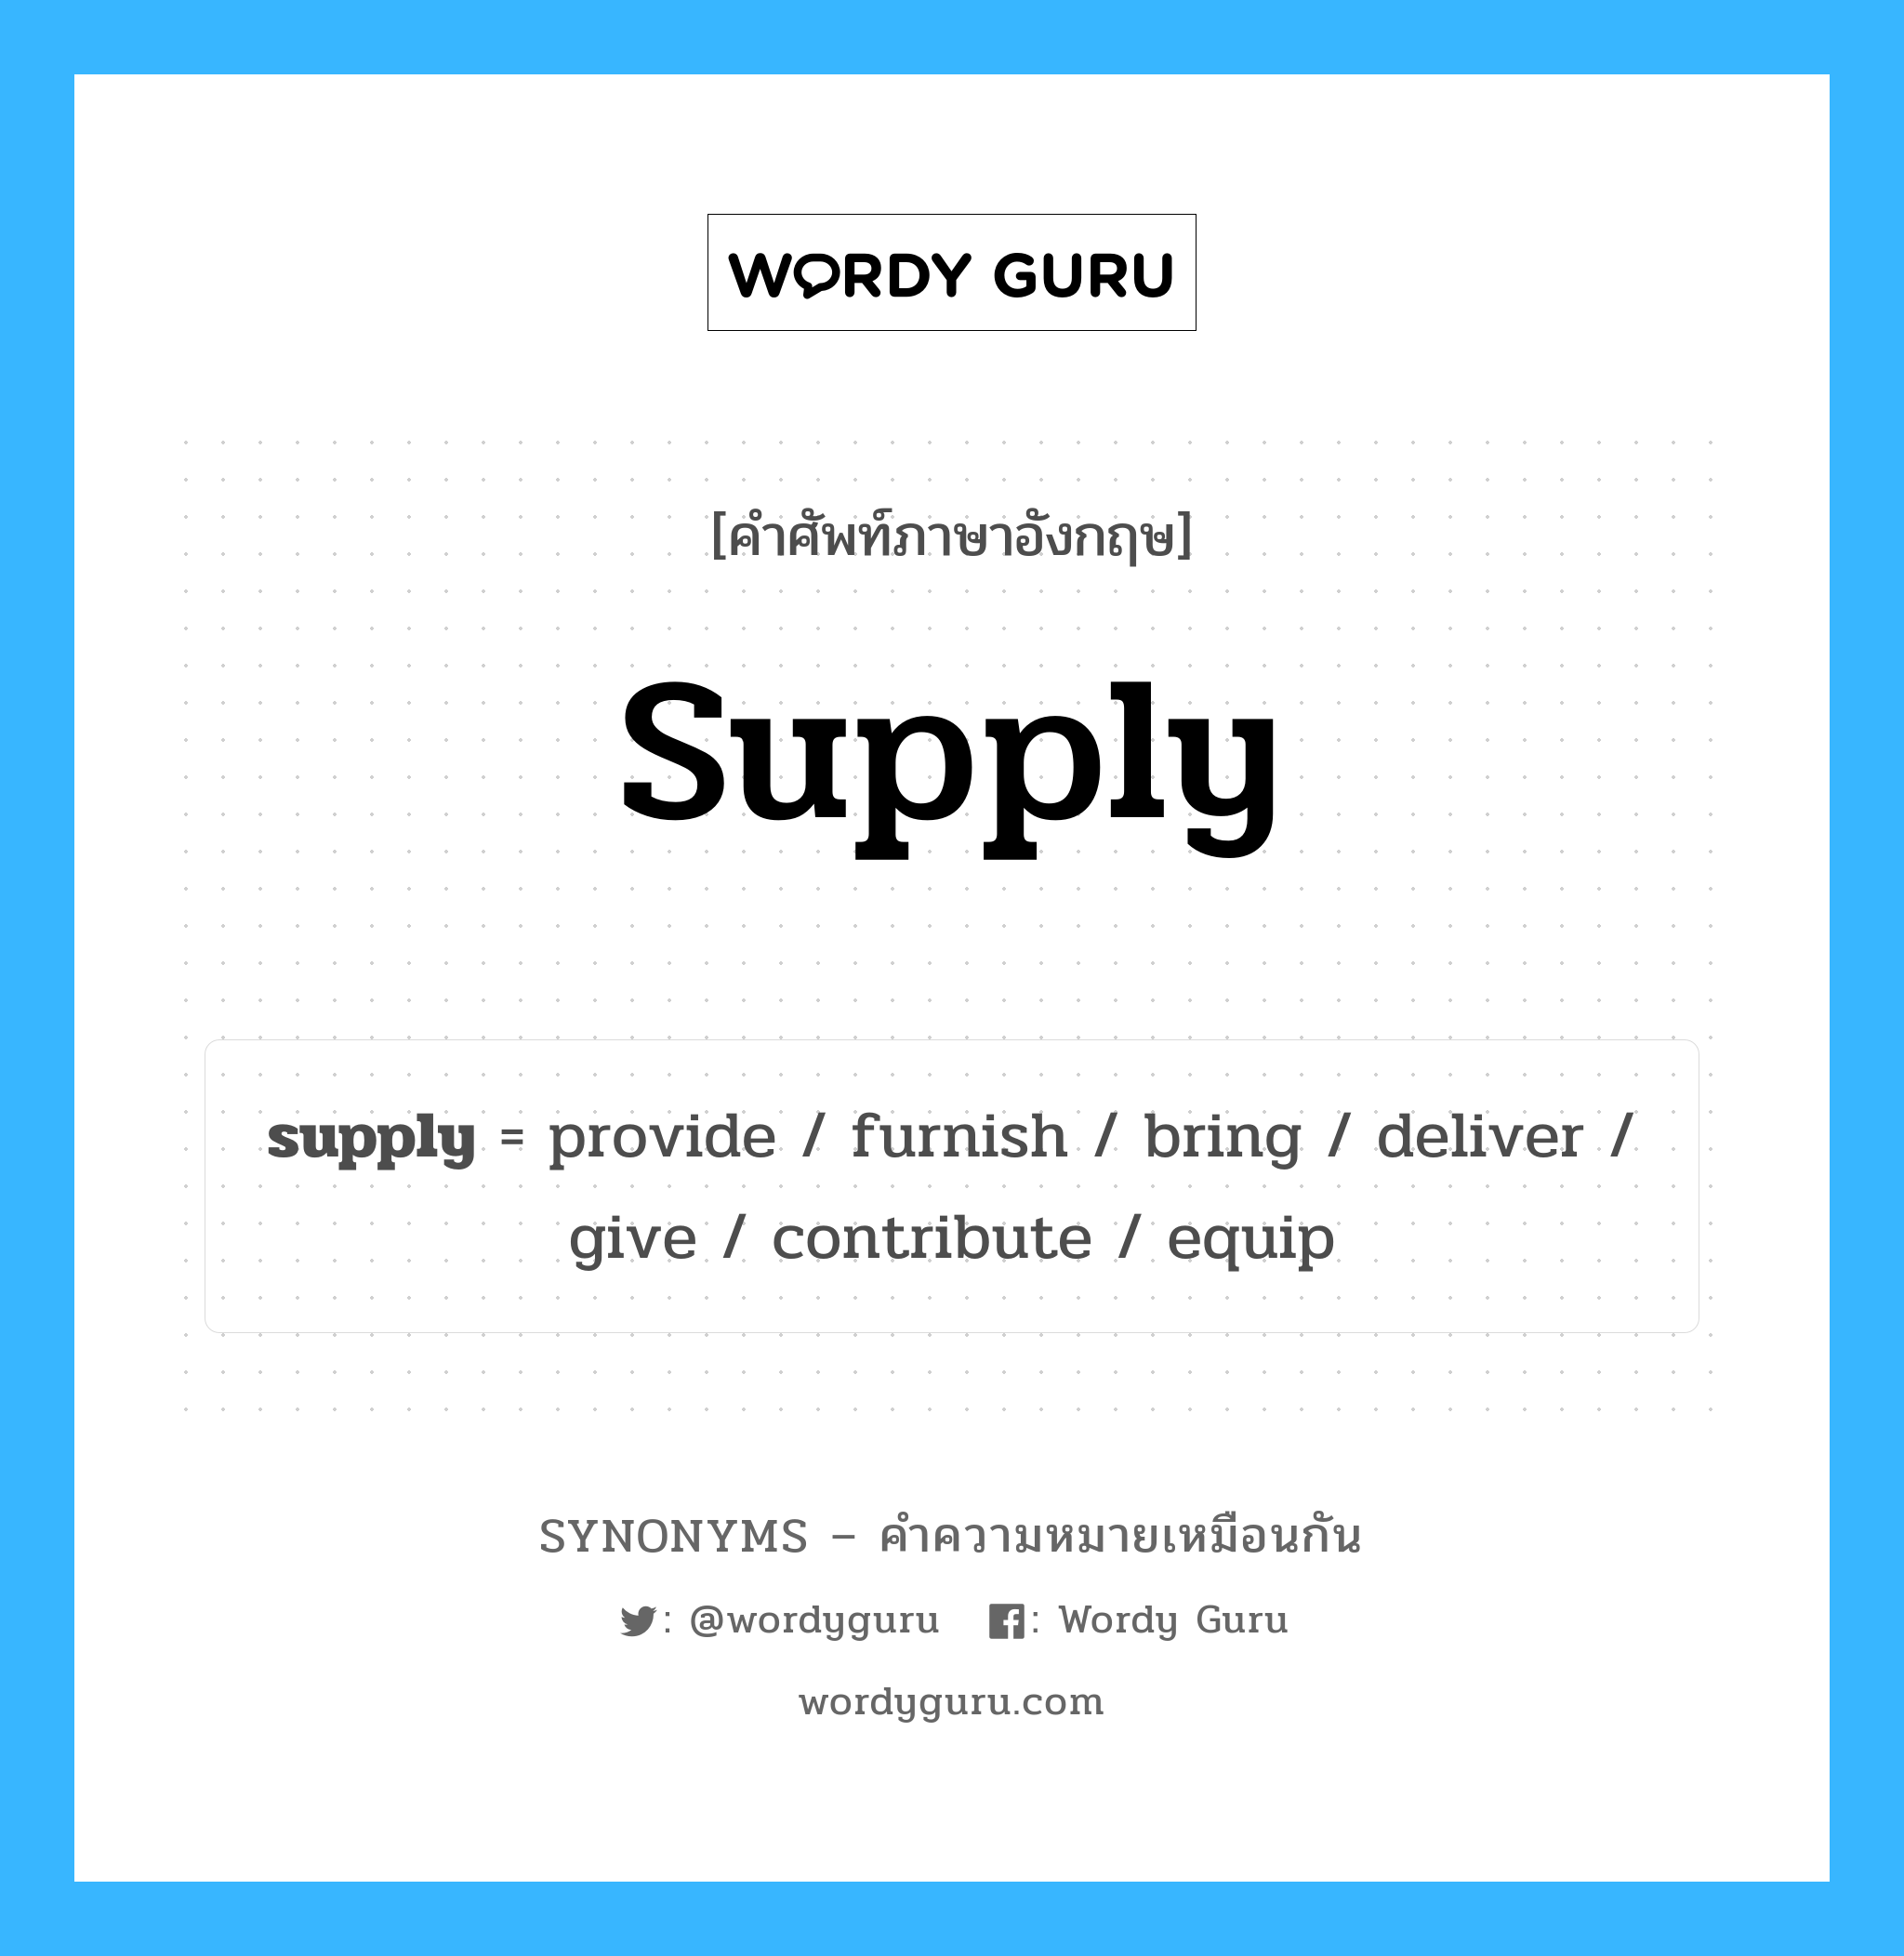 deliver เป็นหนึ่งใน supply และมีคำอื่น ๆ อีกดังนี้, คำศัพท์ภาษาอังกฤษ deliver ความหมายคล้ายกันกับ supply แปลว่า ส่ง หมวด supply